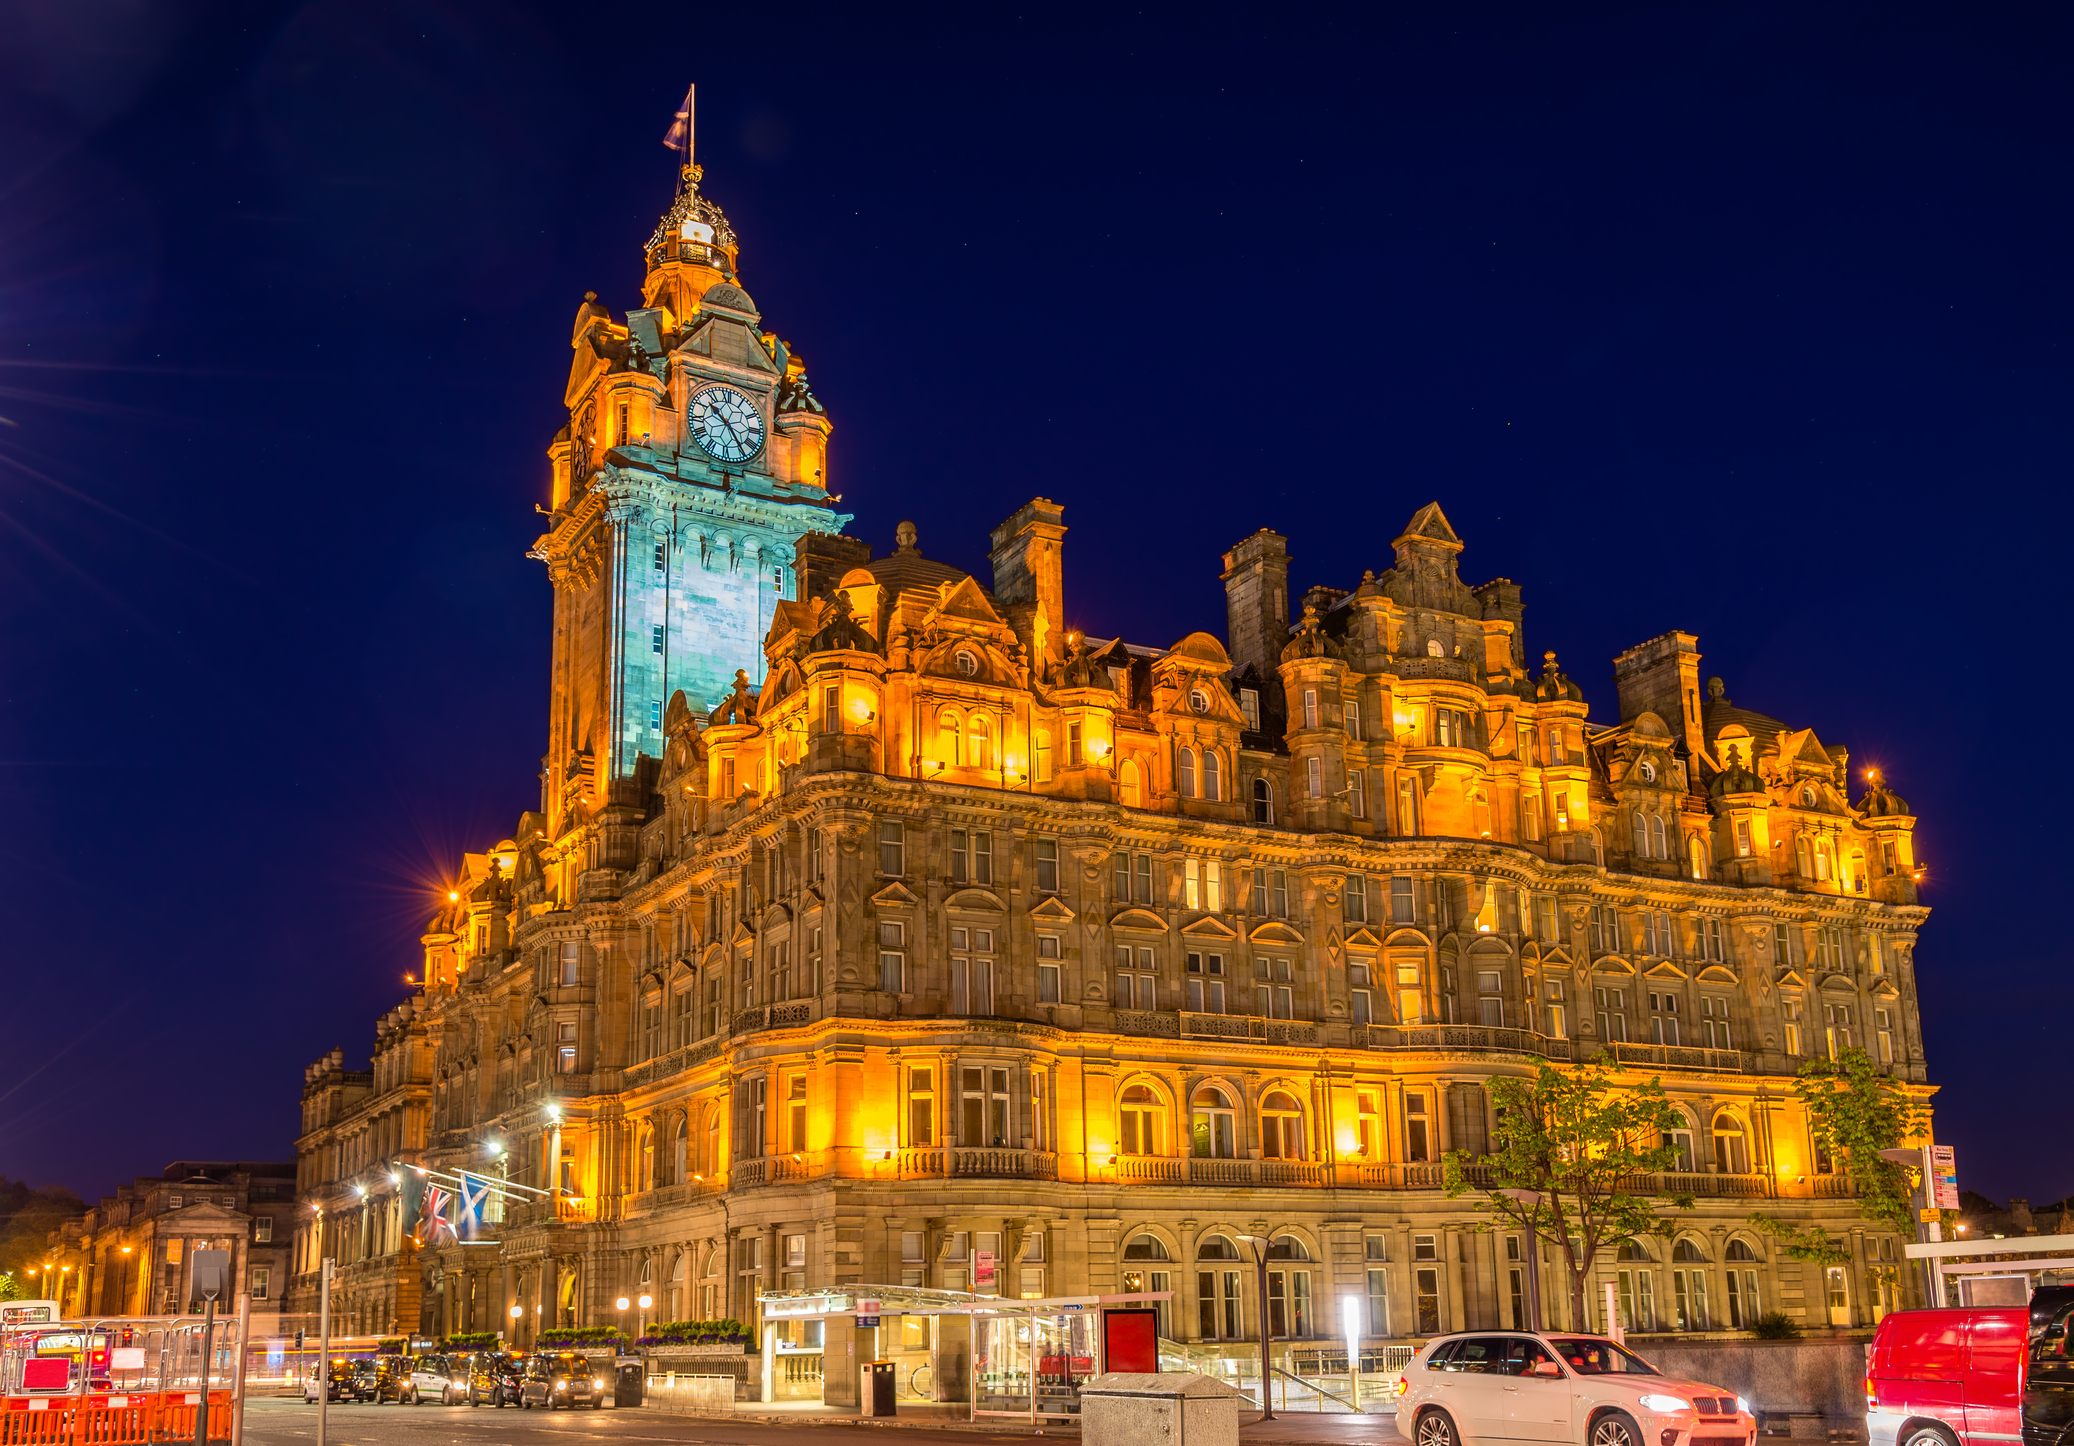 The Balmoral Hotel, a historic building in Edinburgh – Scotland